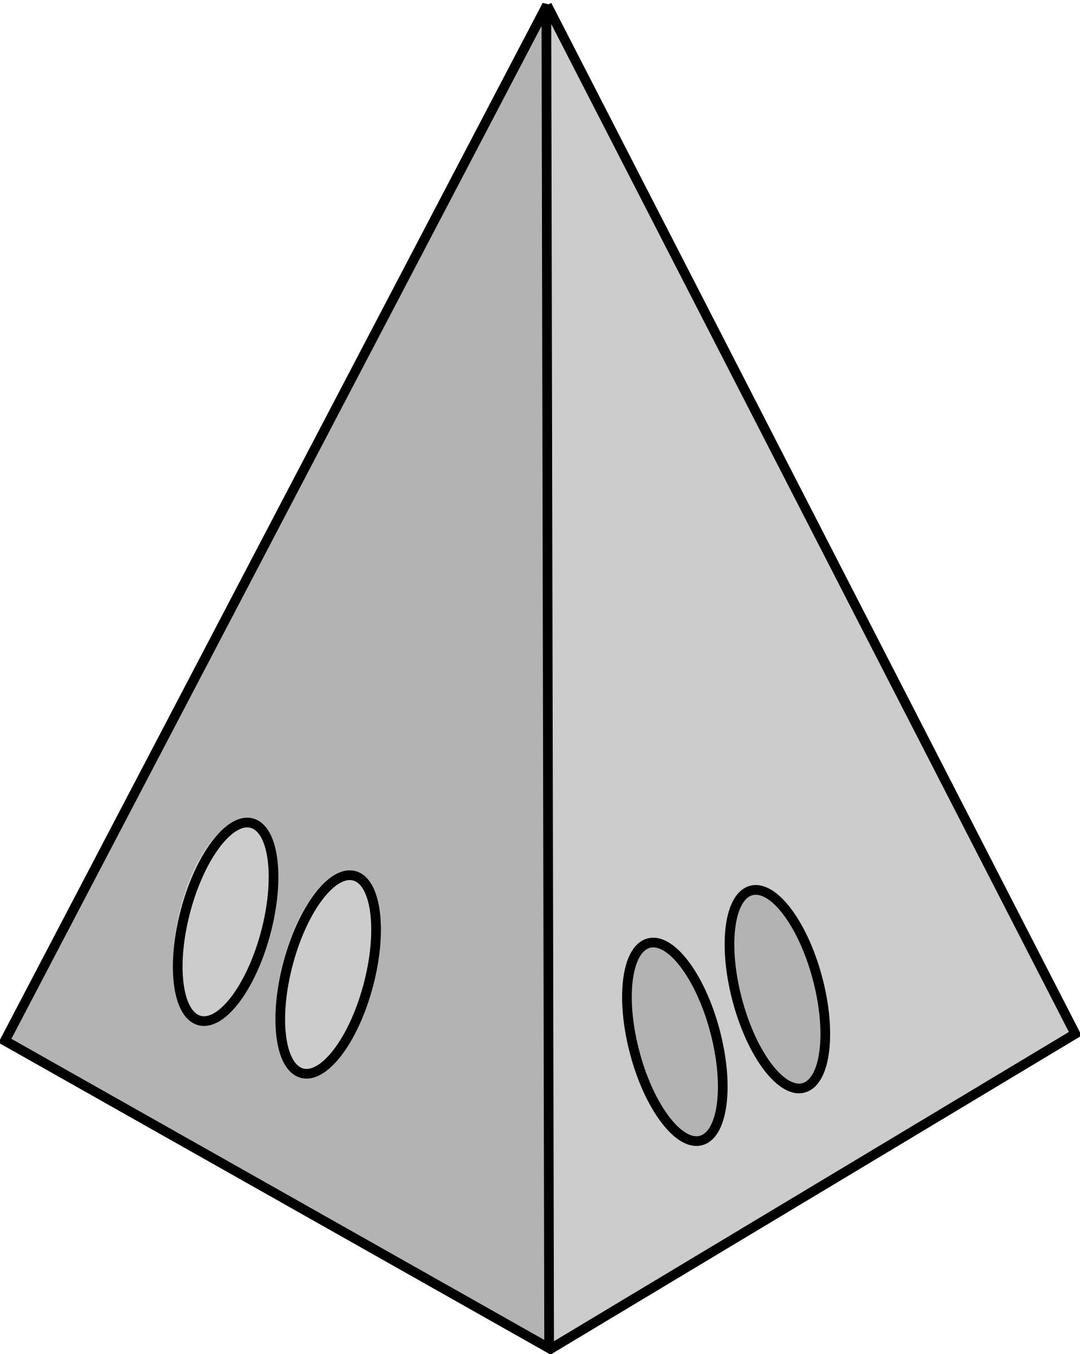 Icehouse Pyramid Medium png transparent